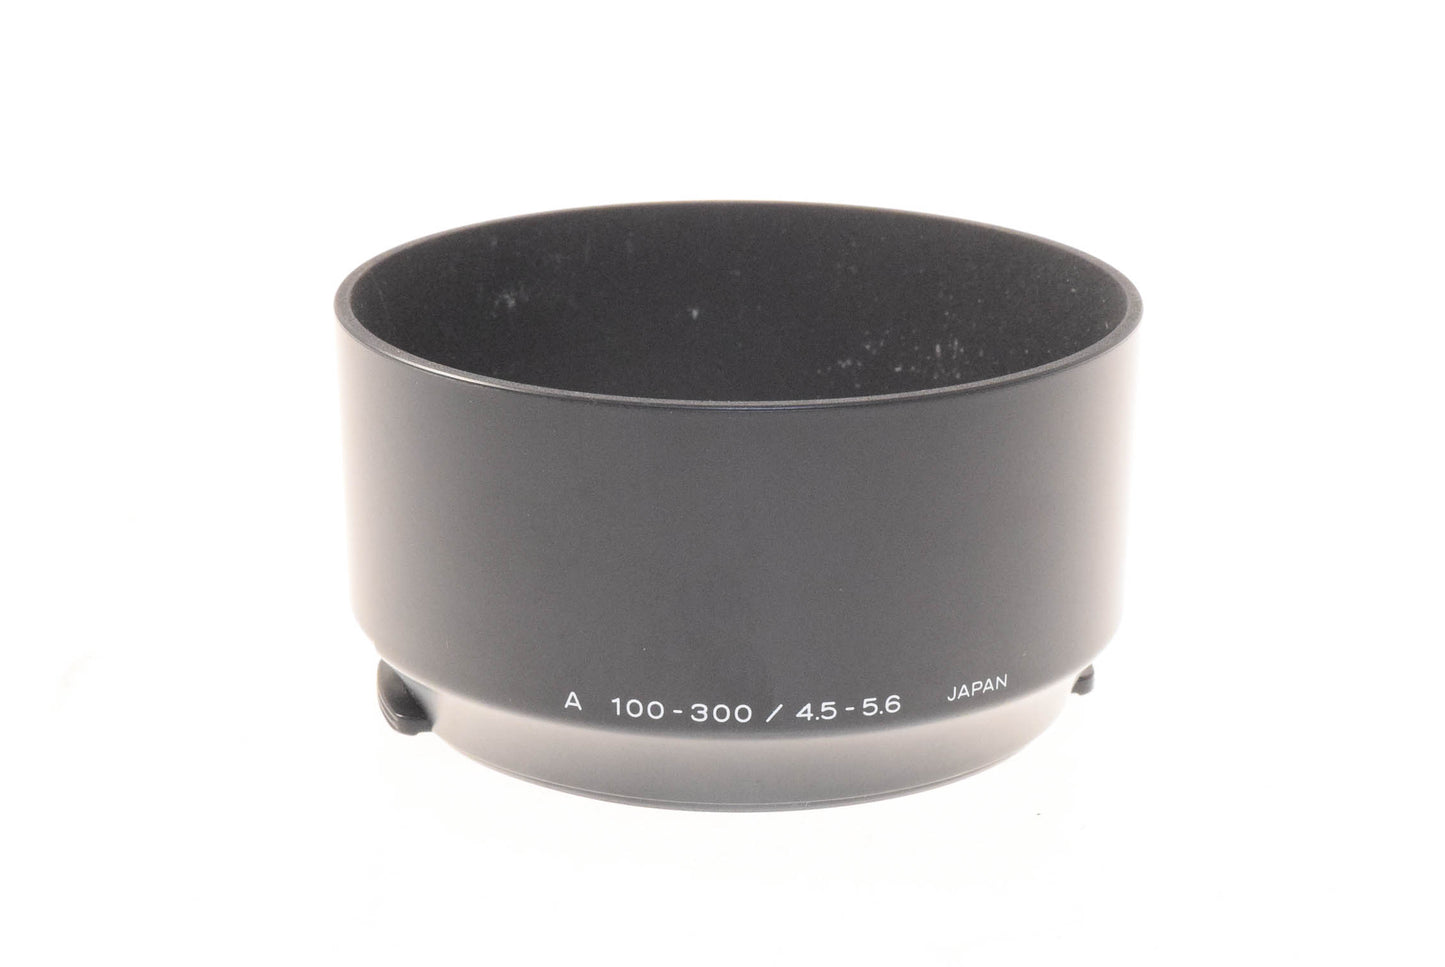 Minolta A 100-300 / 4.5-5.6 Lens Hood